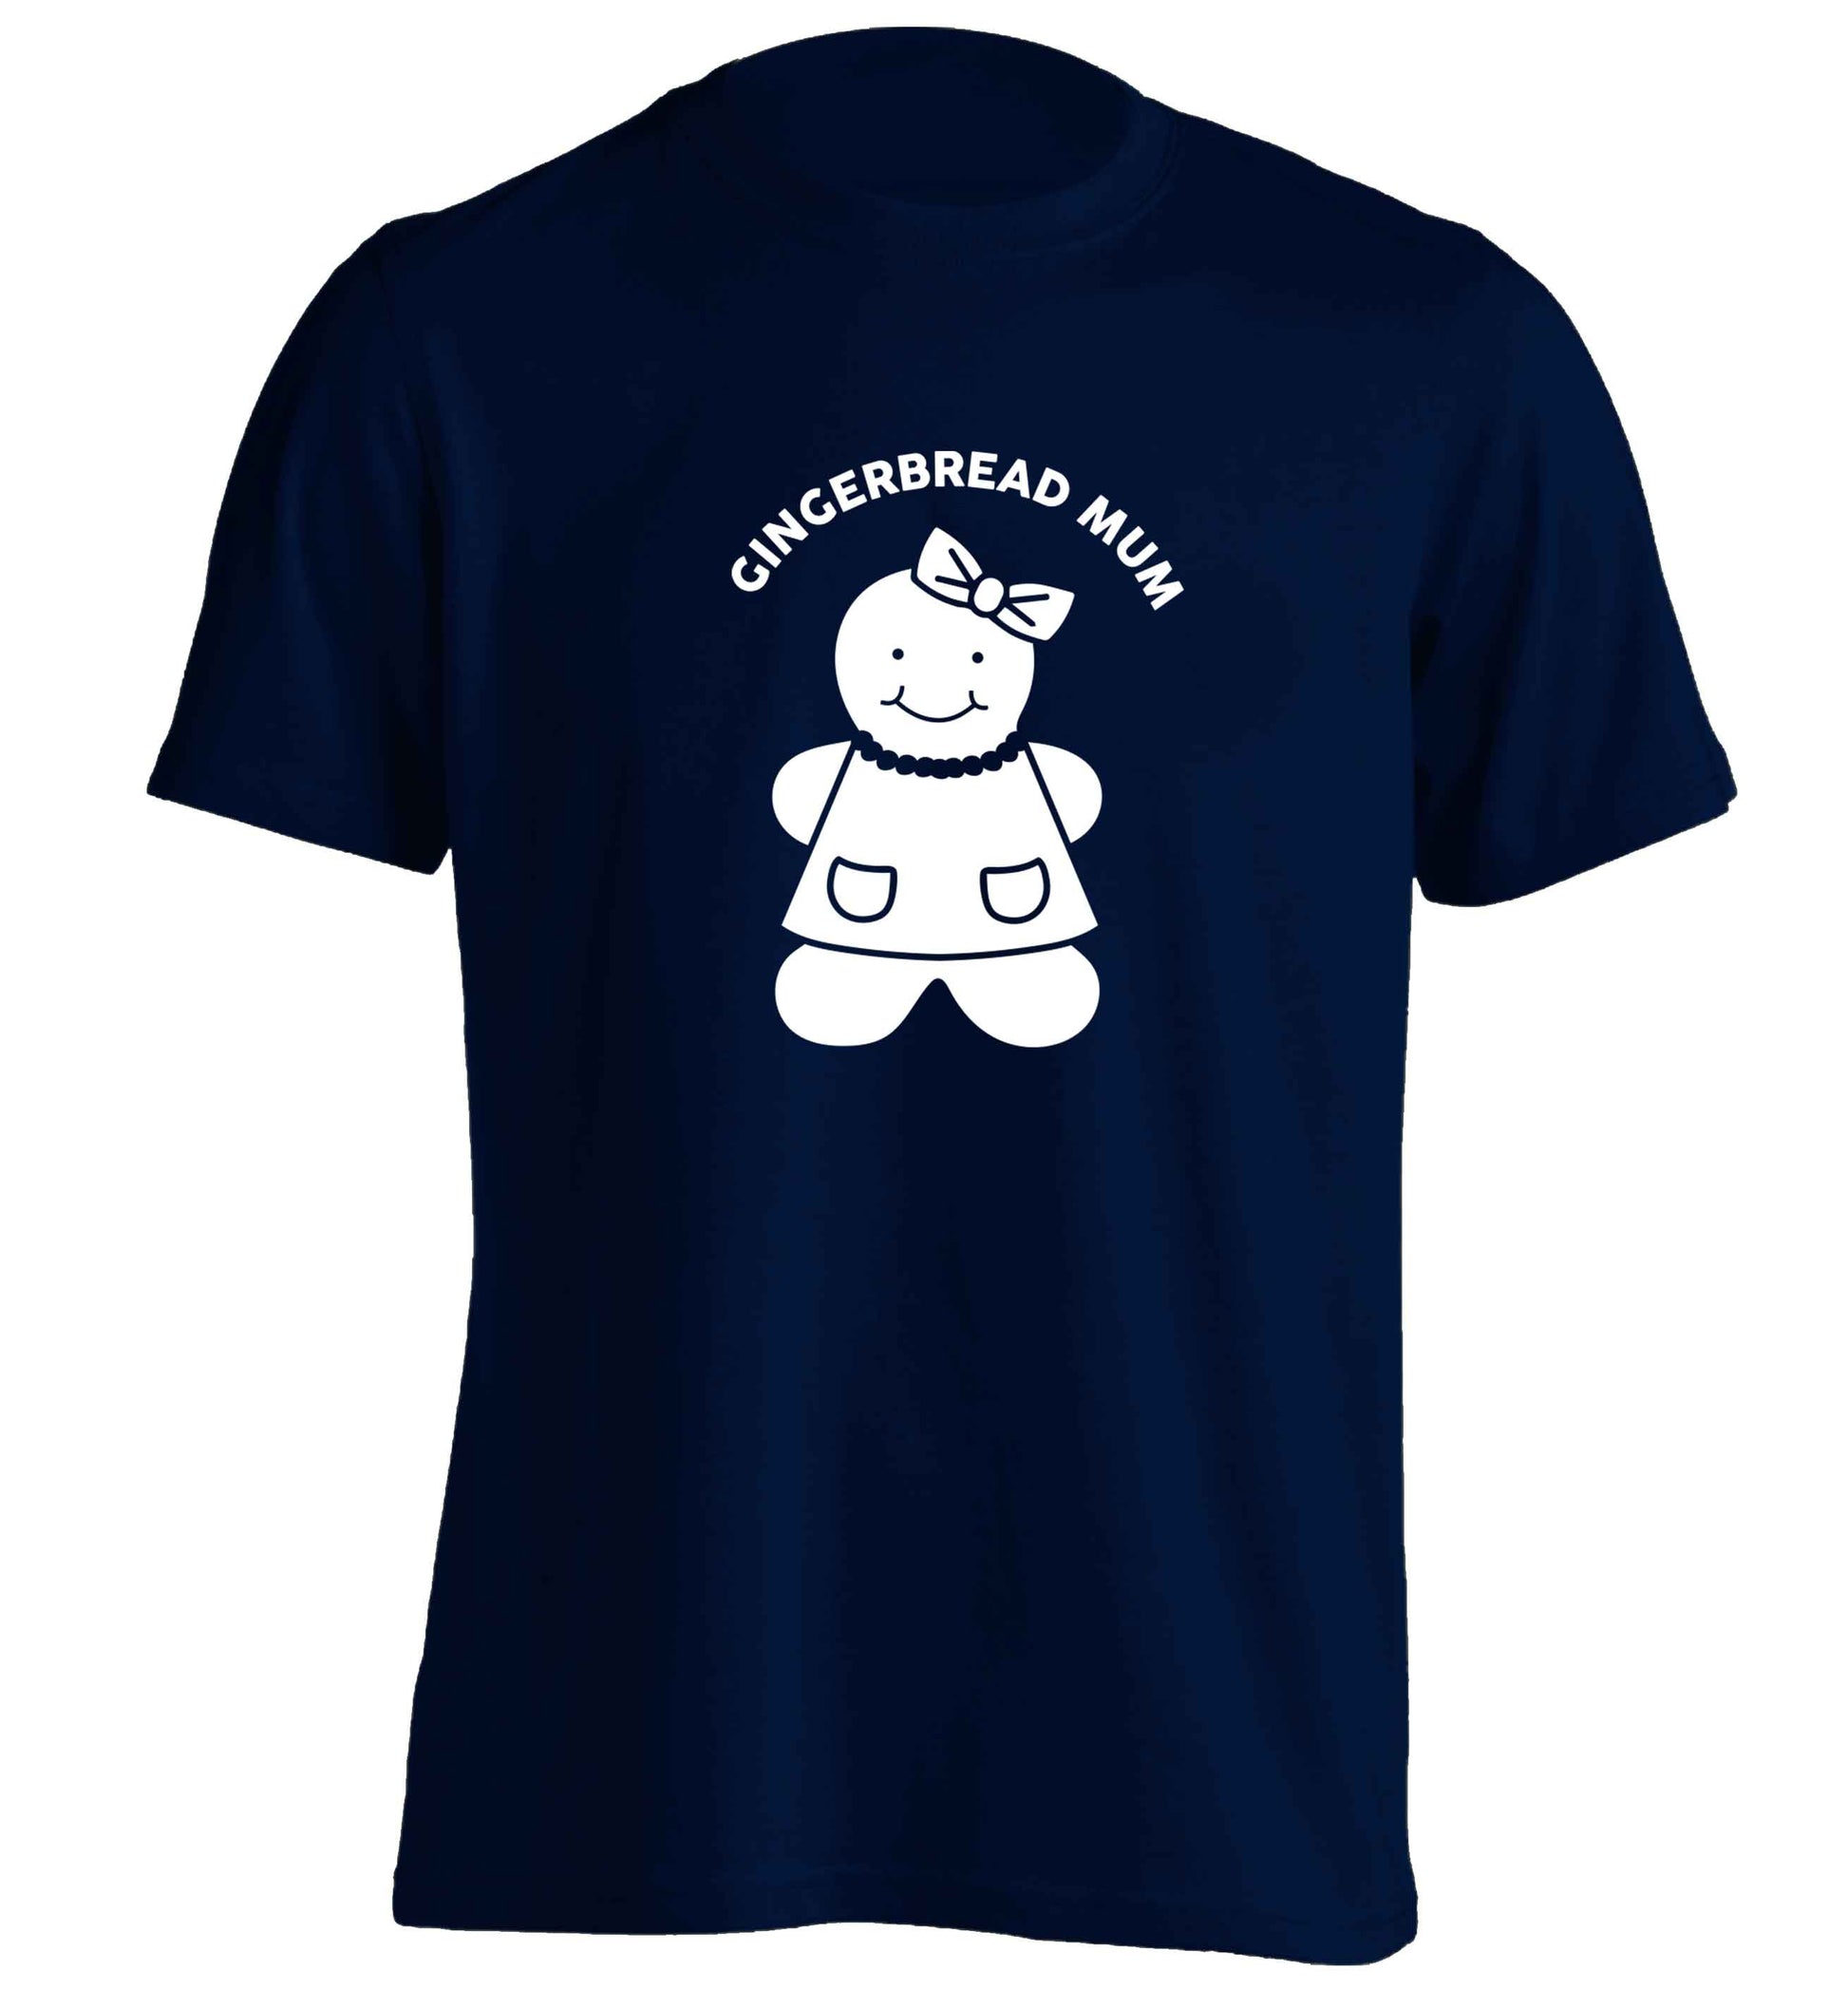 Merry Christmas adults unisex navy Tshirt 2XL